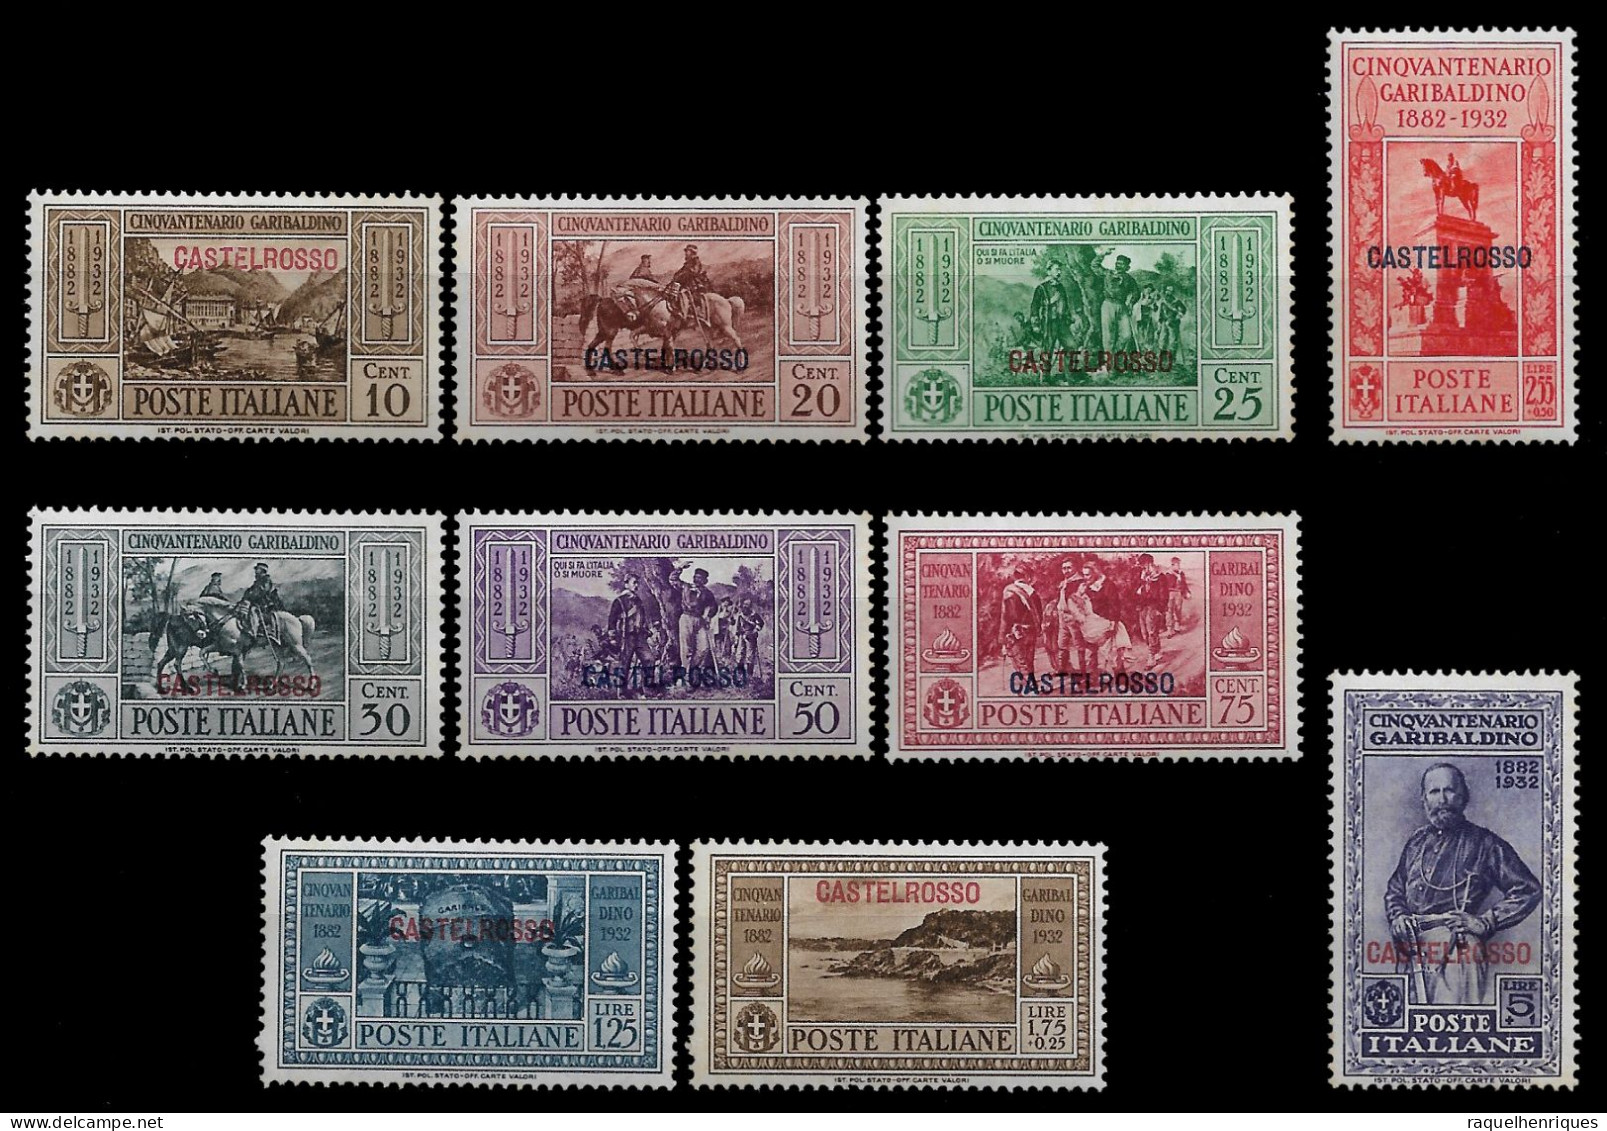 Postage Stamps Of Italian Colonies - Castelrosso 1932 Giuseppe Garibaldi SET MNH (BA5#396) - Castelrosso